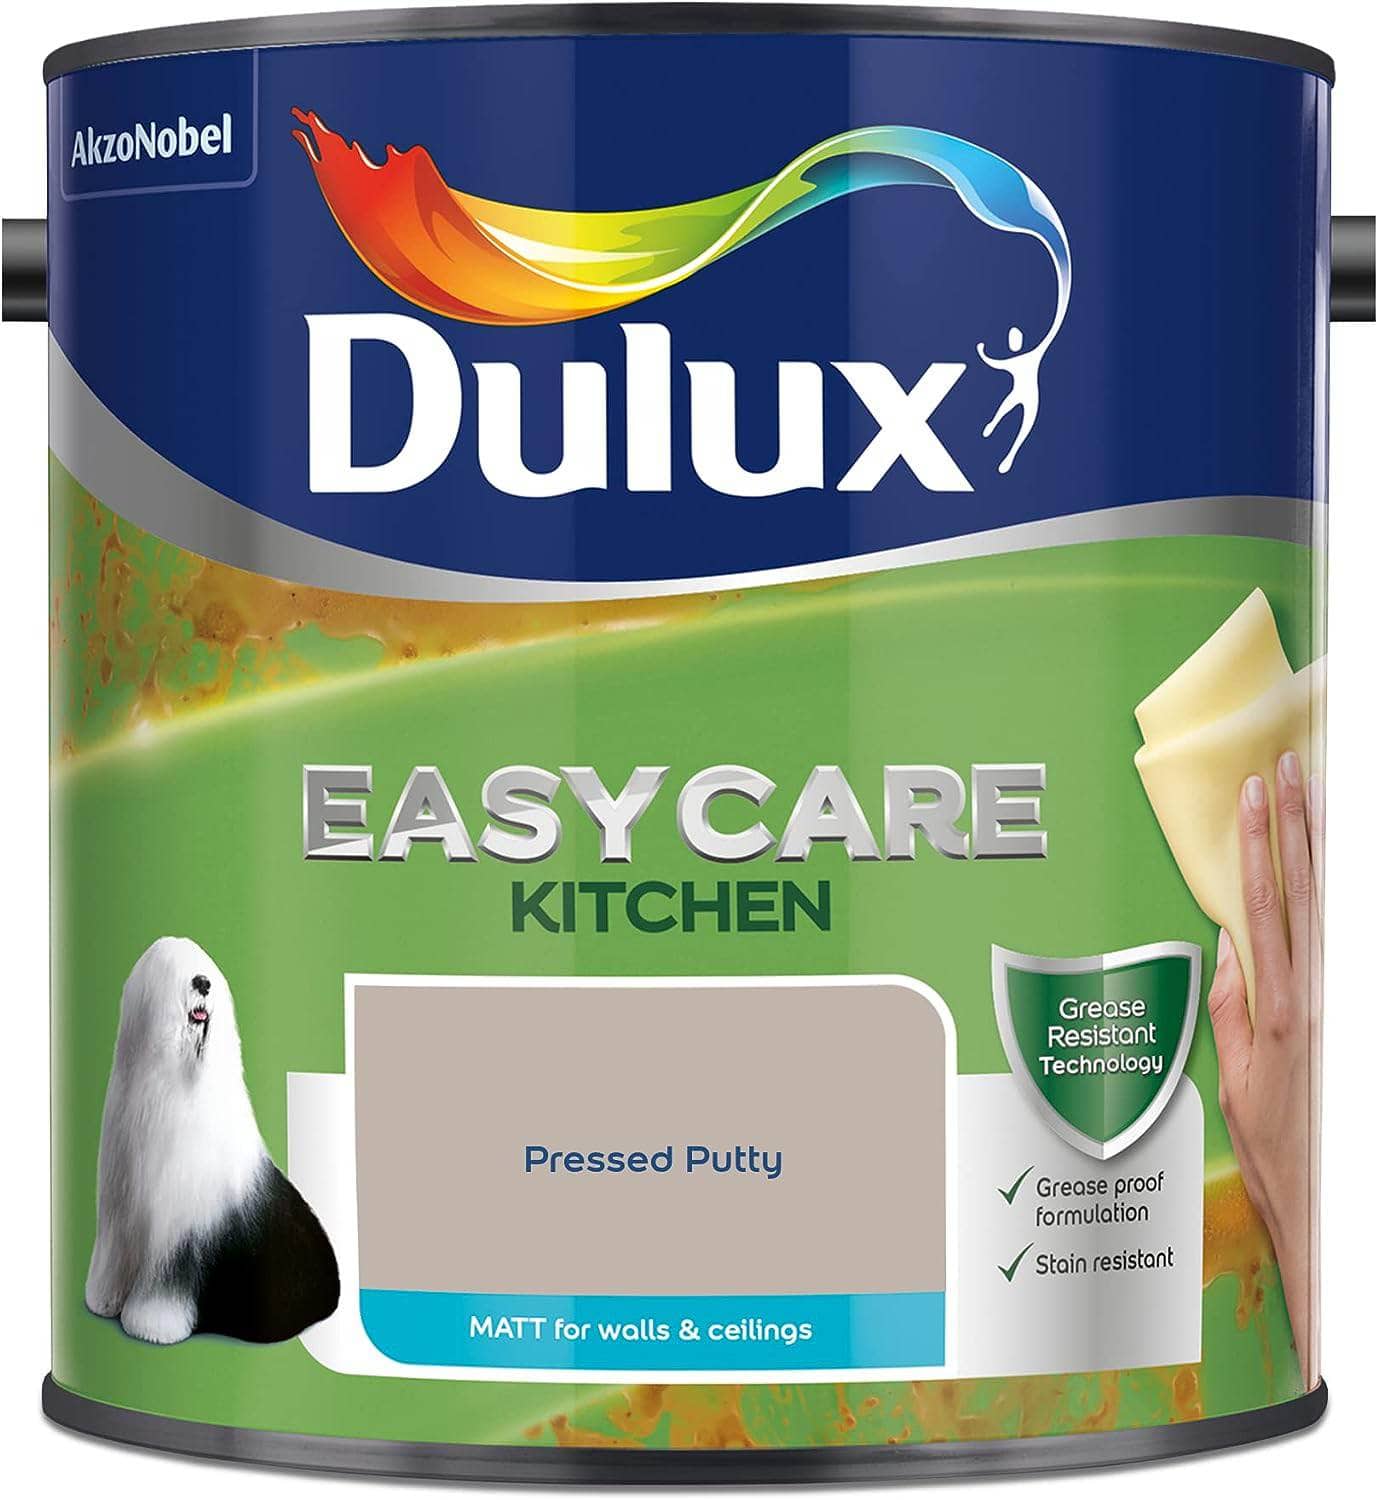 Paint  -  Dulux Easycare Kitchen 2.5L Matt Emulsion - Pressed Putty  -  60005905